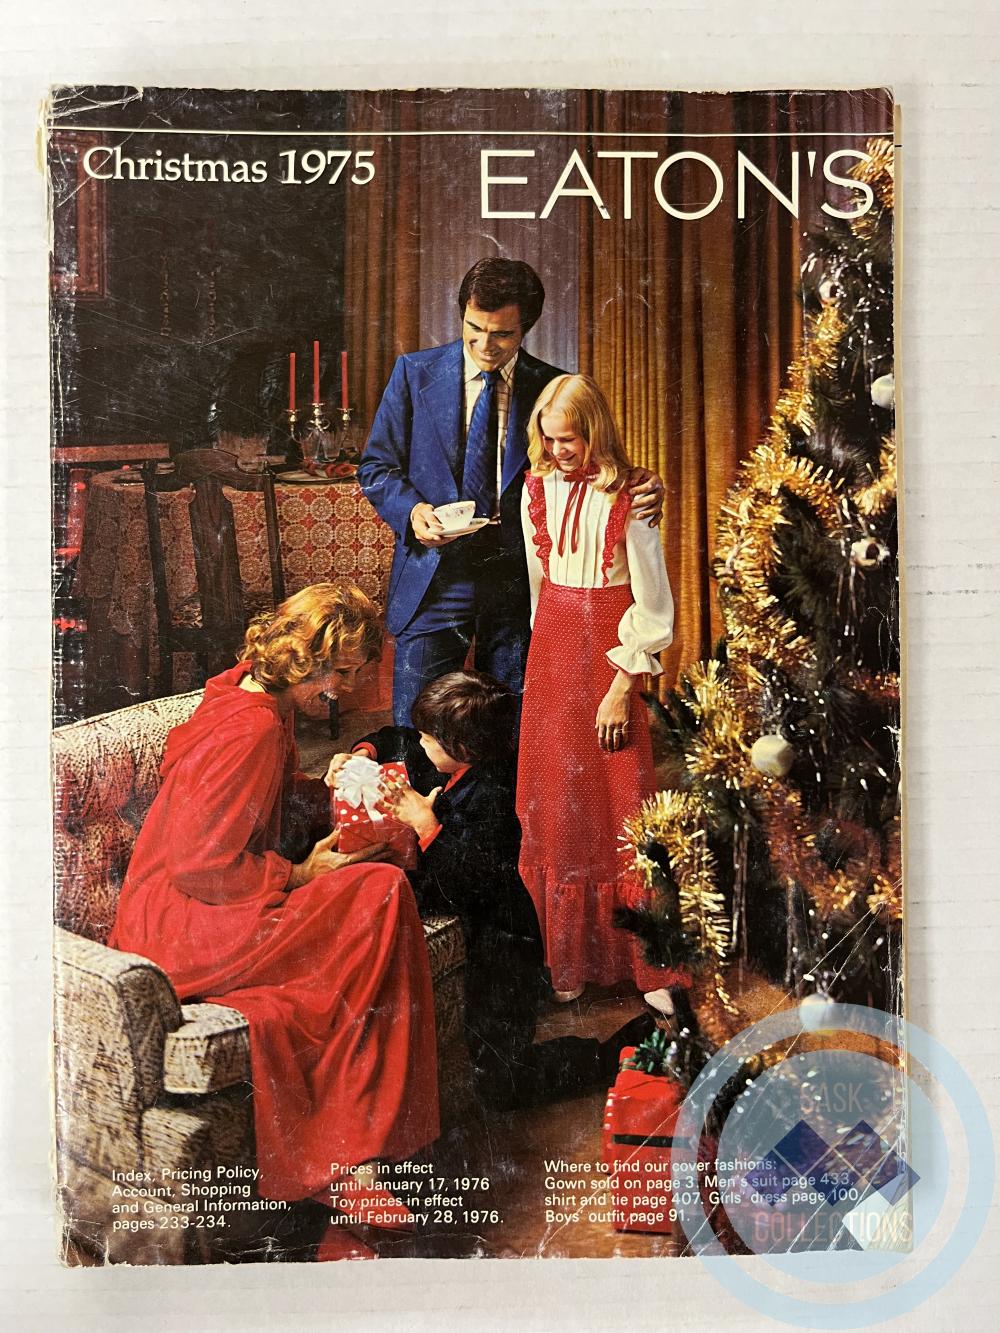 Eaton's Christmas 1975 Catalogue